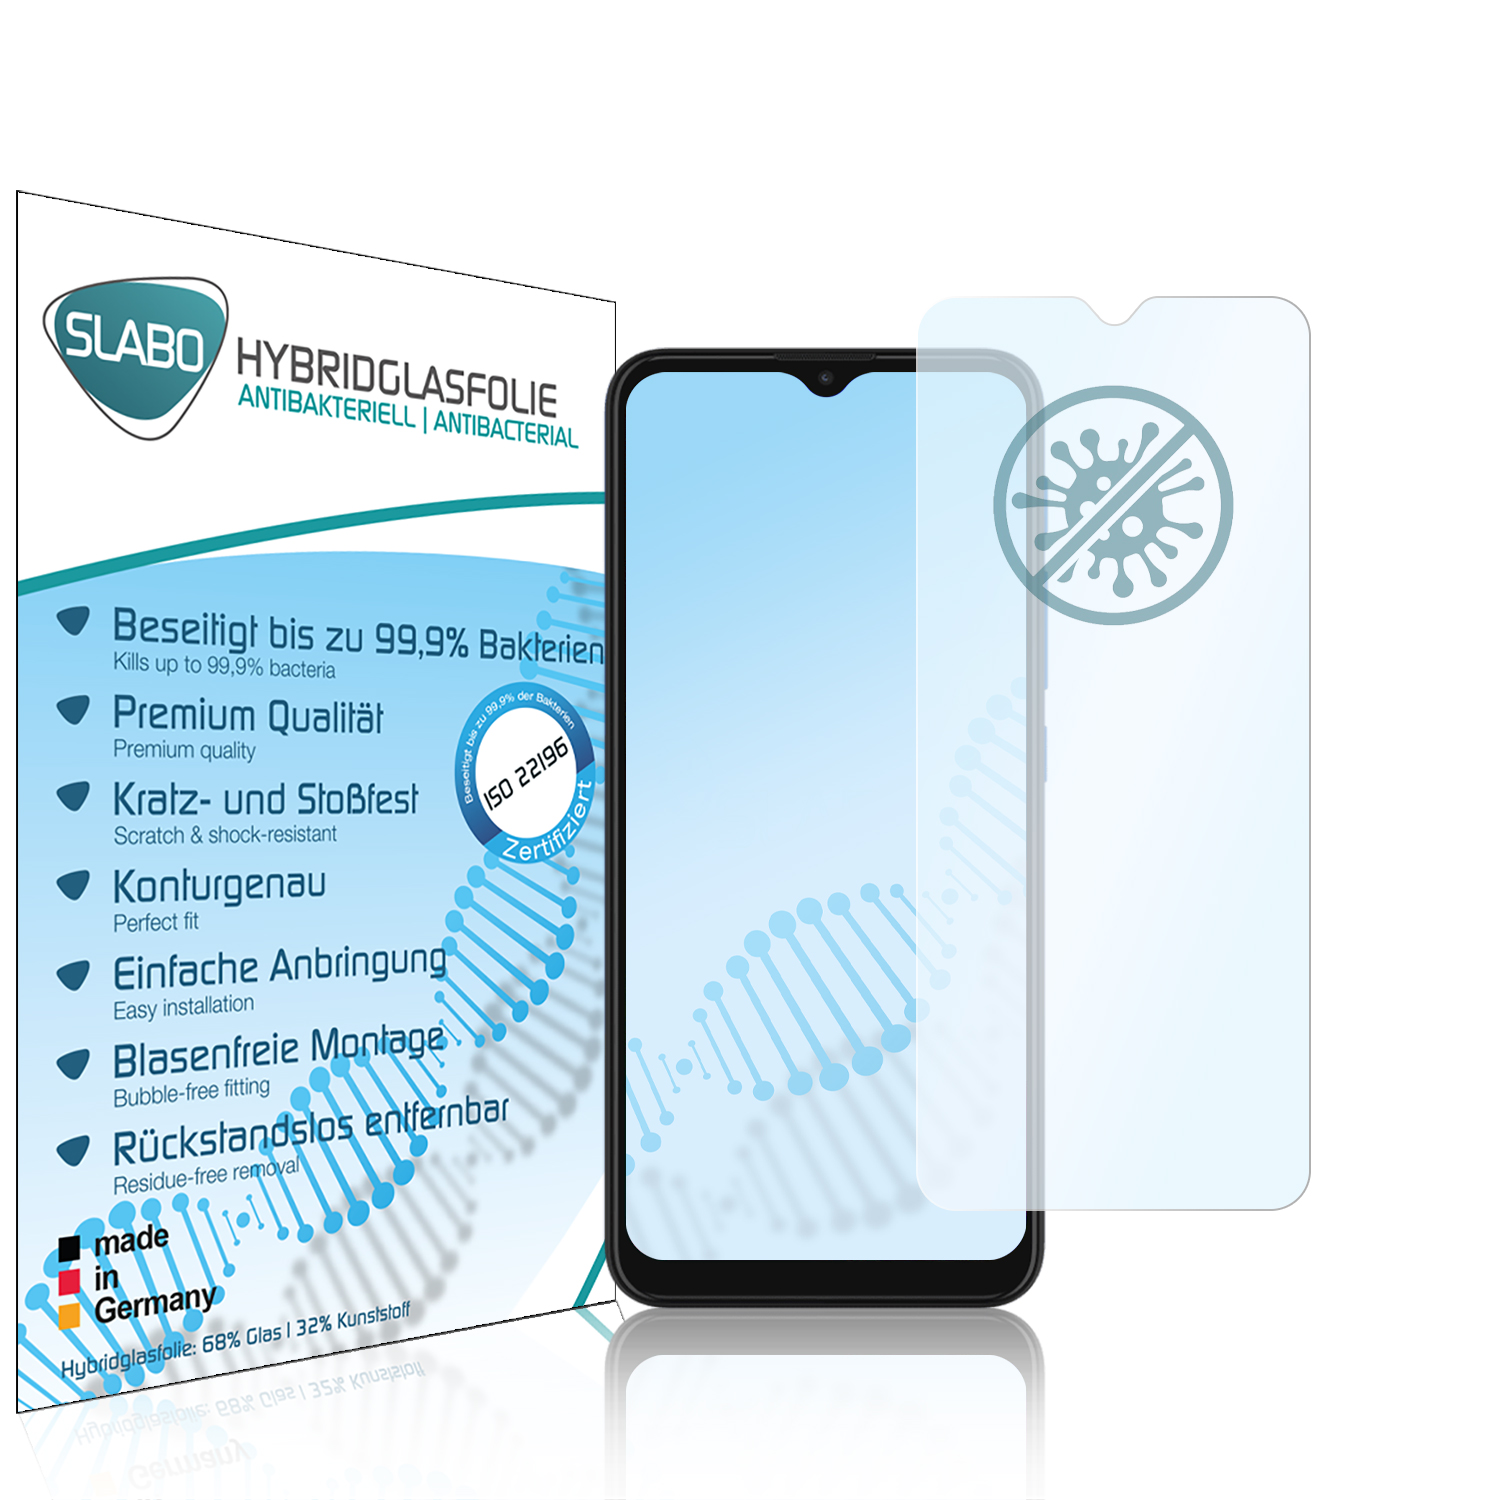 SLABO antibakteriell flexibles Hybridglas e7 Motorola moto PLUS) Displayschutz(für